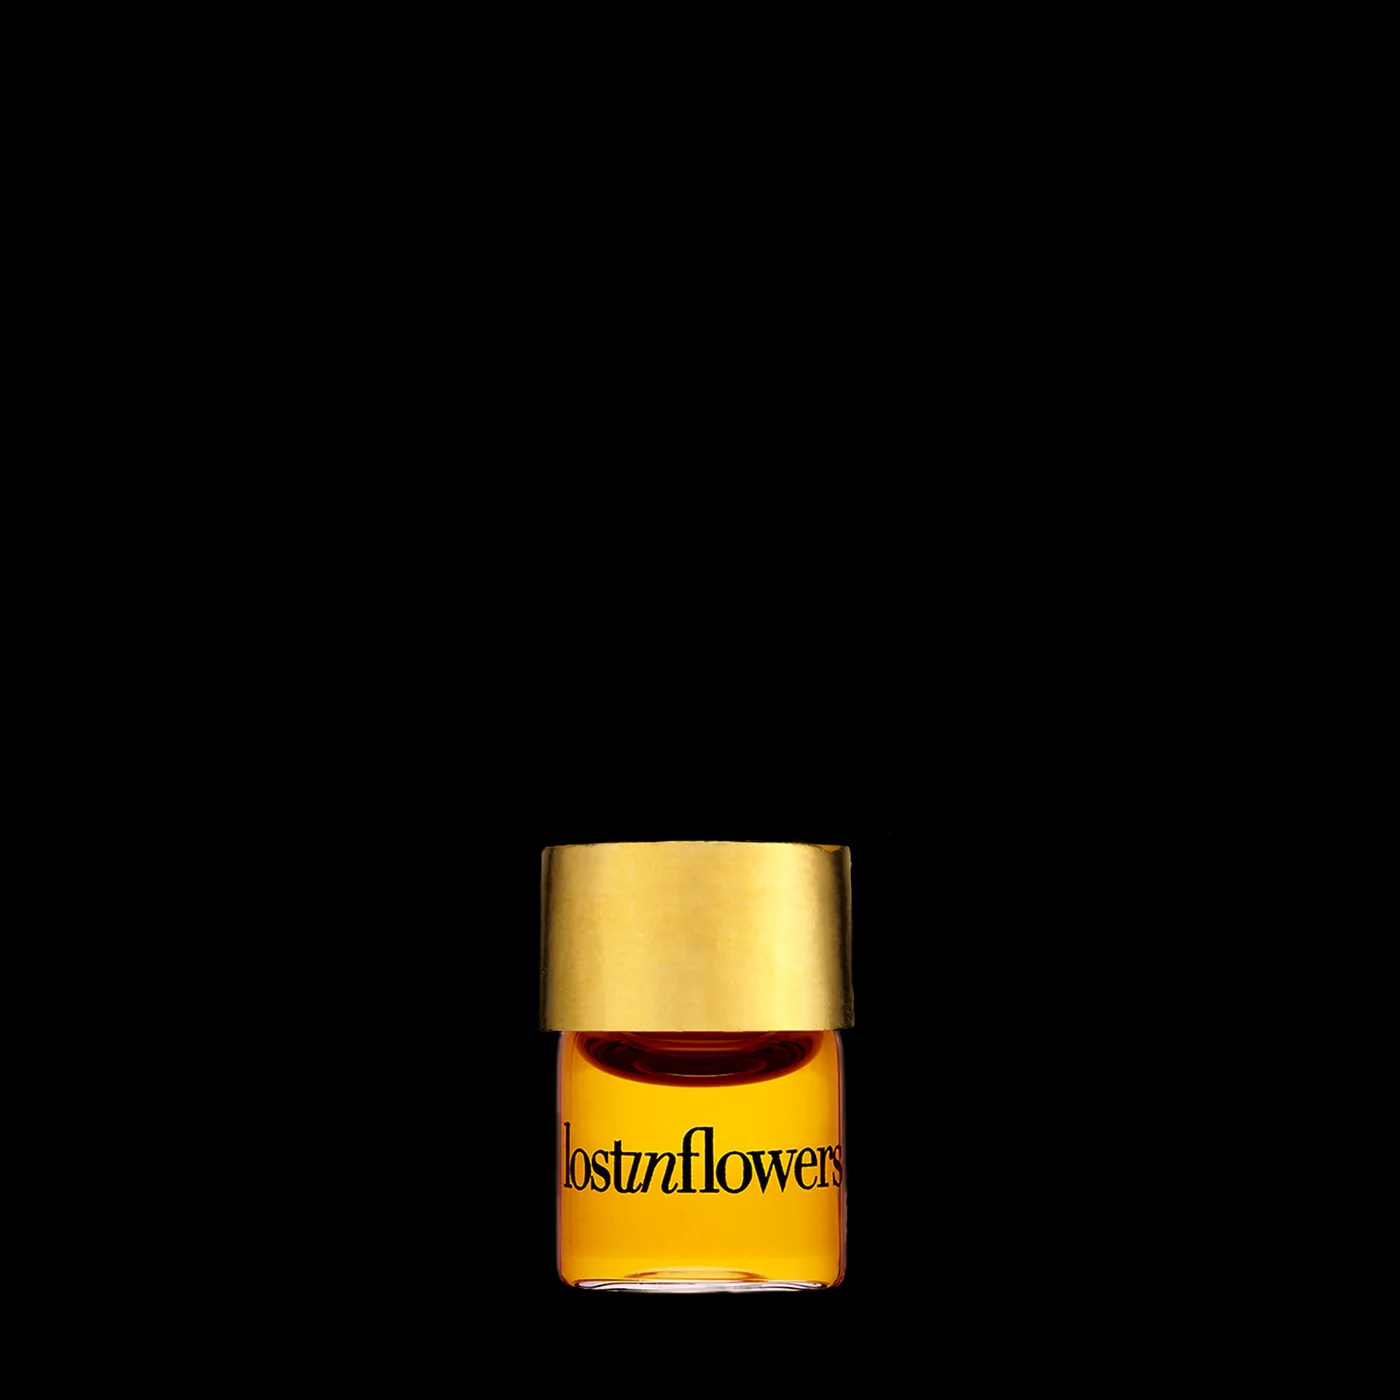 strangelove - lostinflowers prefume oil refills | Perfume Lounge